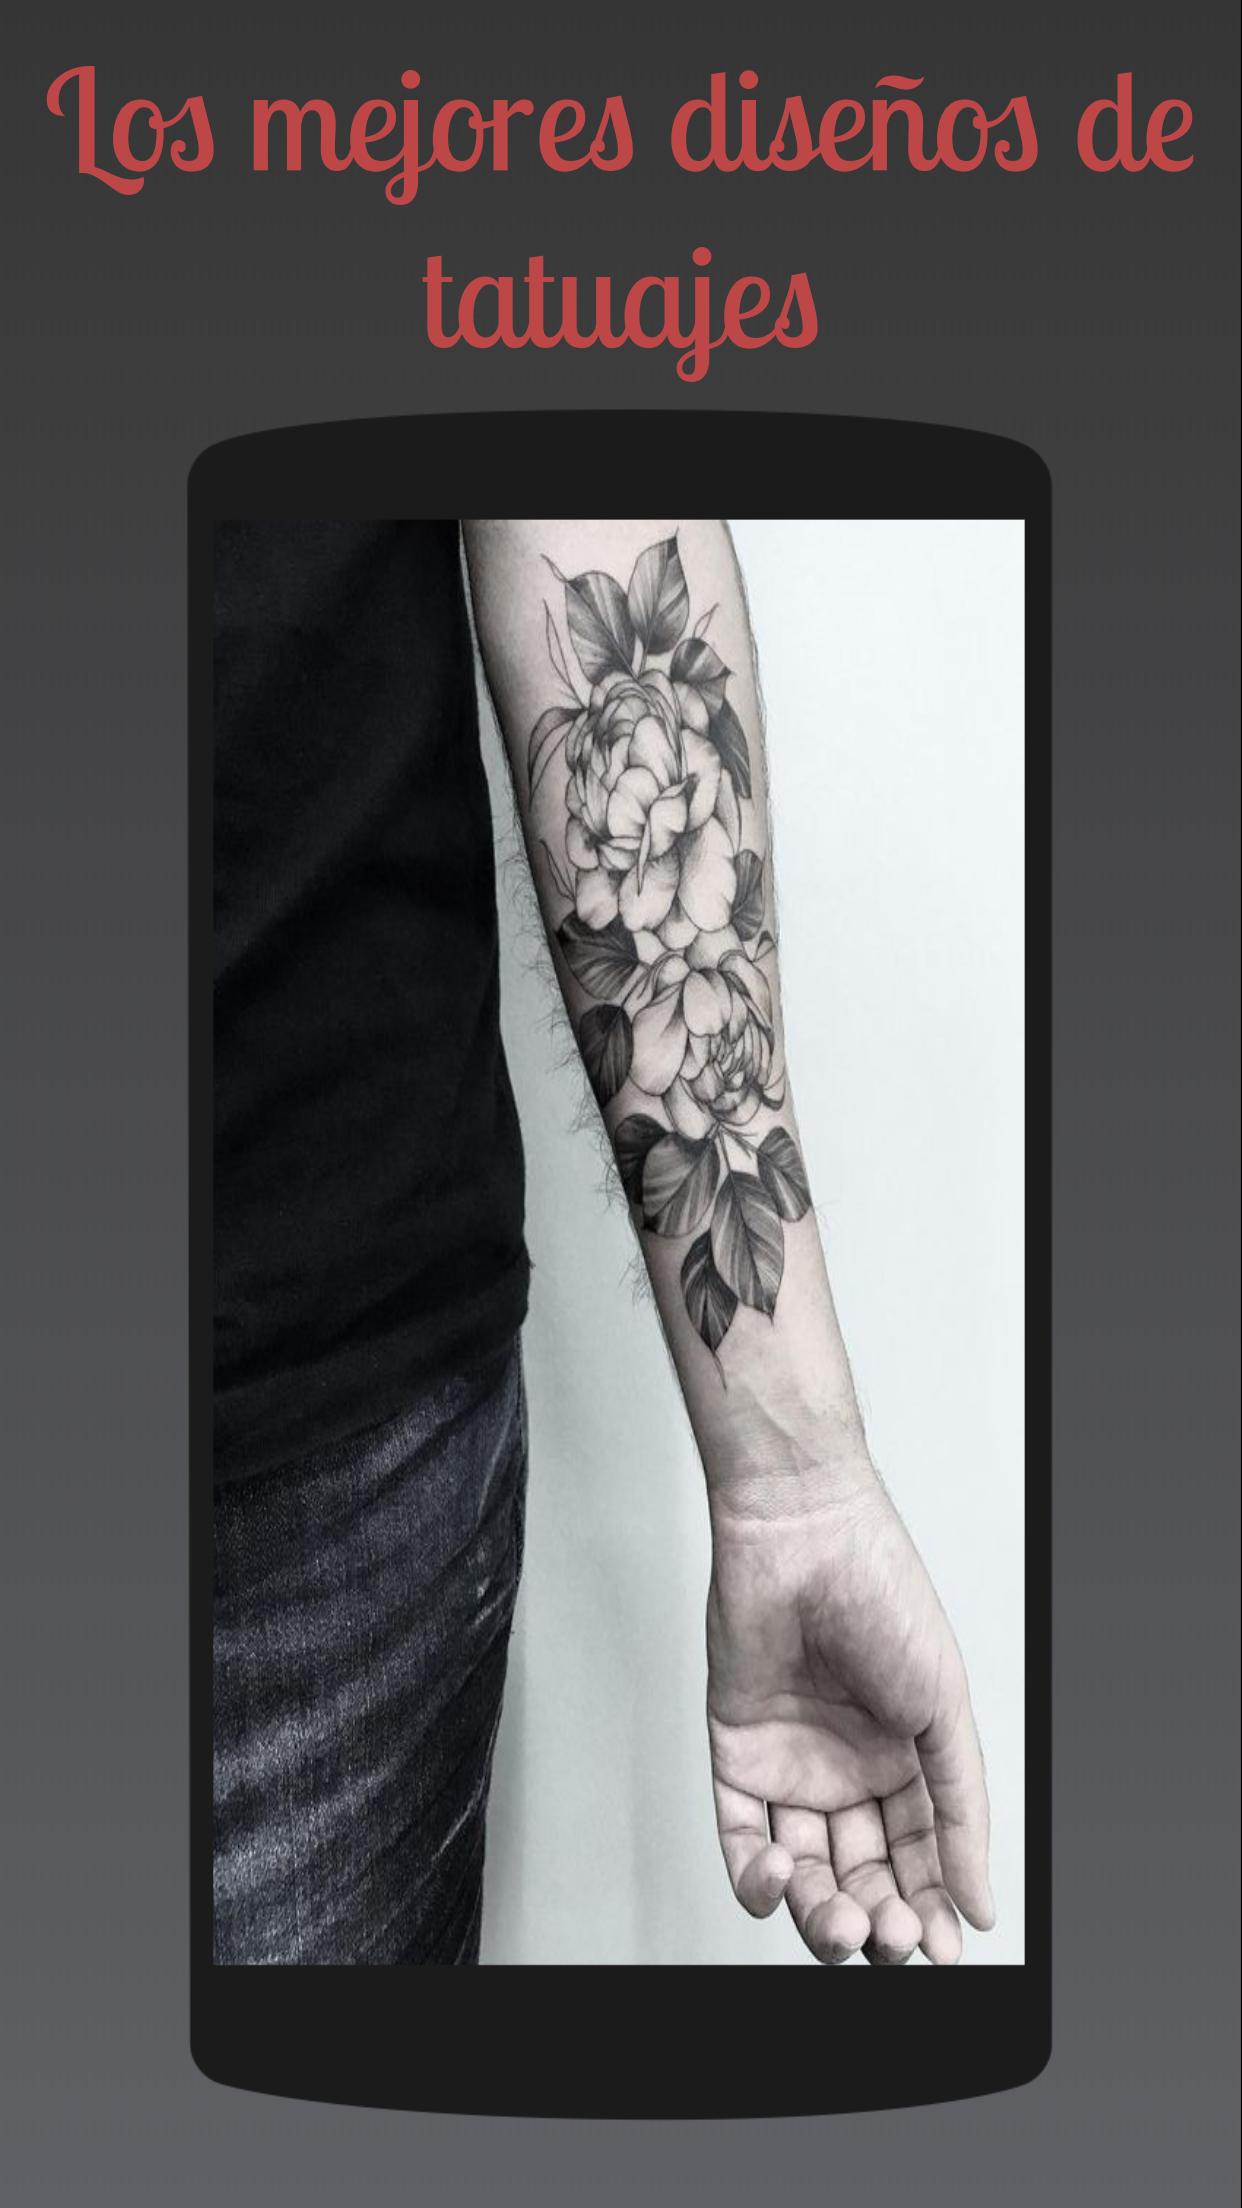 1000 ideas de tatuajes: Tatto Gallery 1.1 Screenshot 5